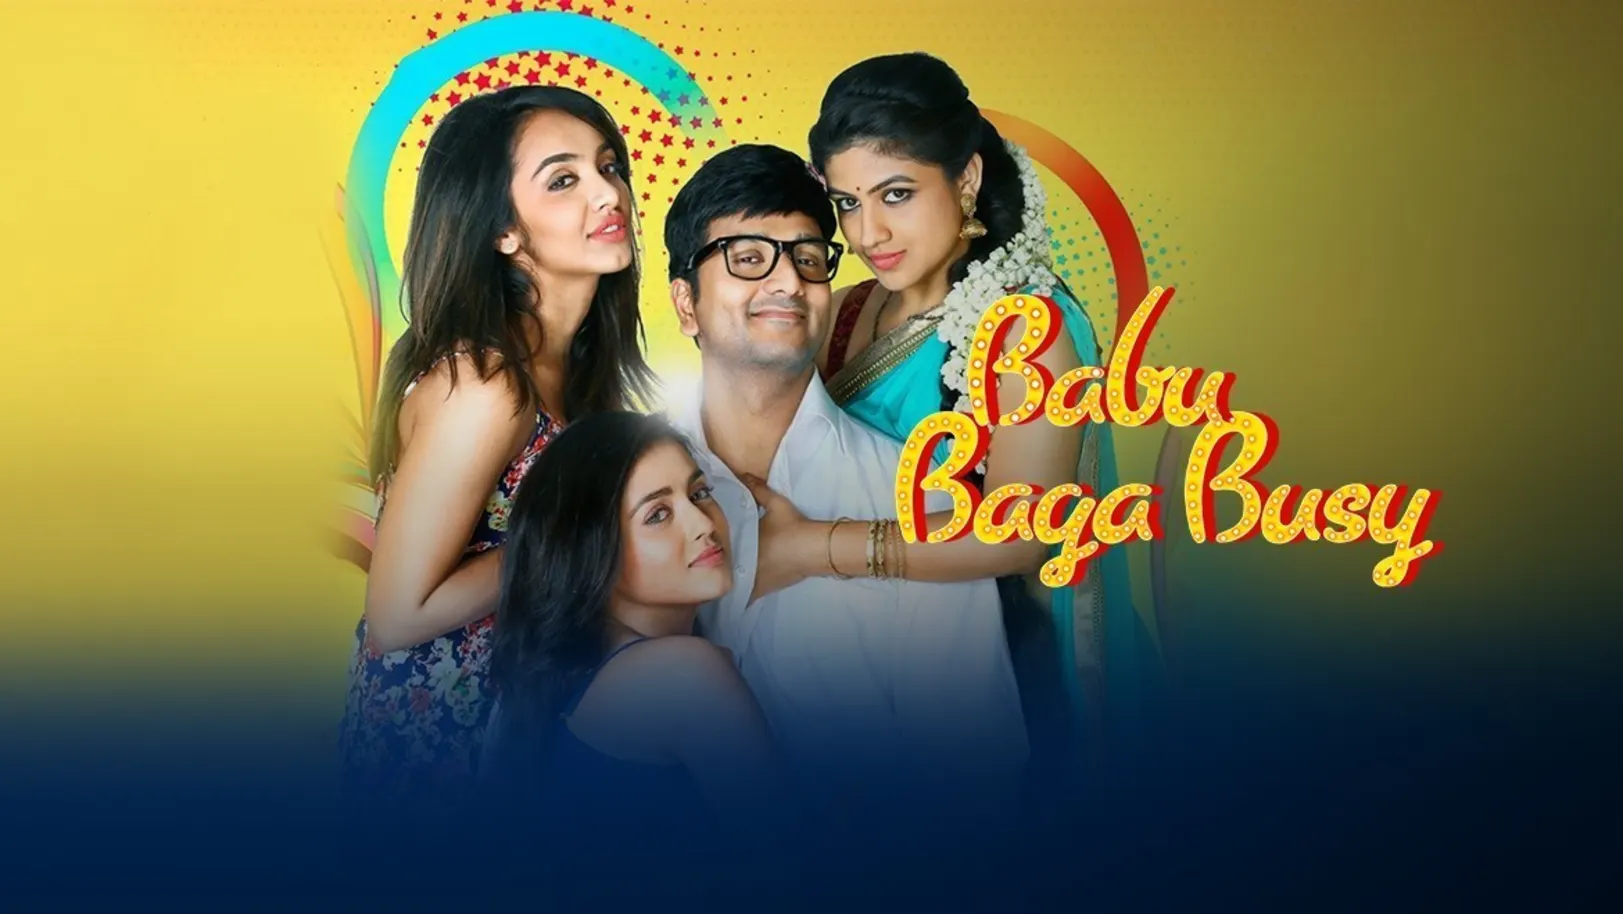 Babu Baga Busy Movie